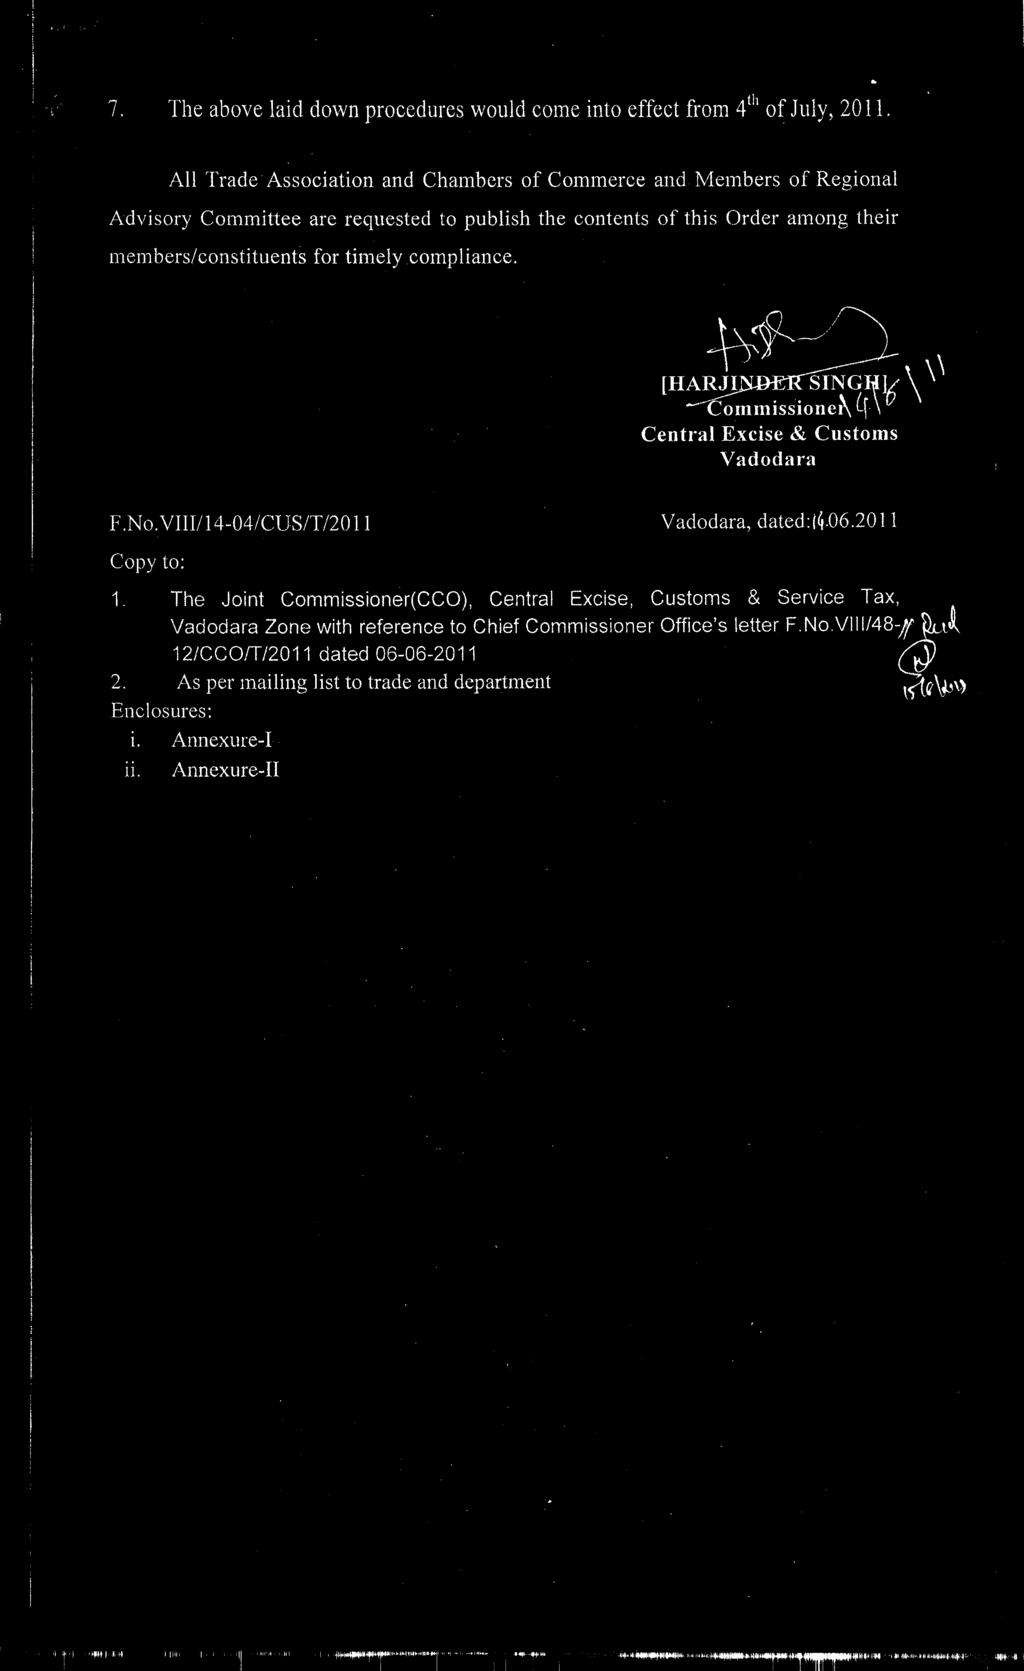 timely compliance. [HARJI SINGIfkr Commissione(c n v Central Excise & Customs Vadodara F.No.VIII/14-04/CUS/T/2011 Vadodara, dated: 14.06.